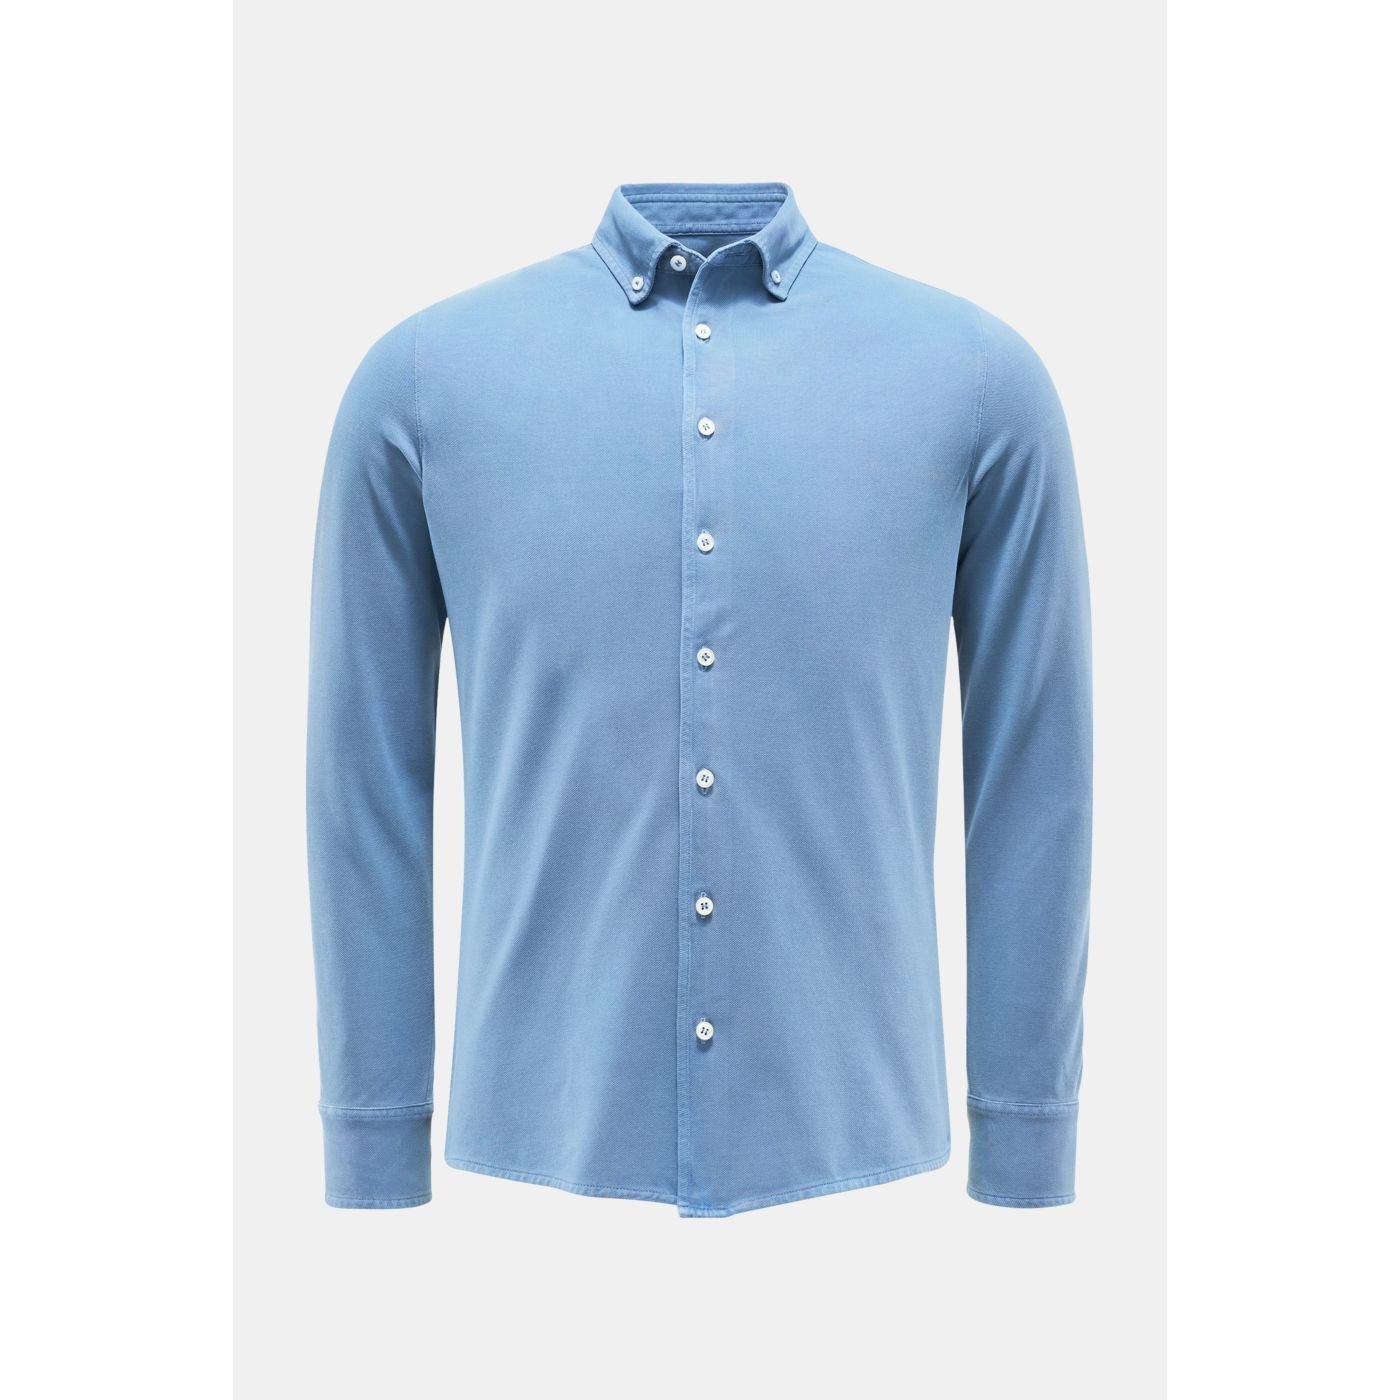 SIMON GRAY piqué shirt button-down collar light blue | BRAUN Hamburg